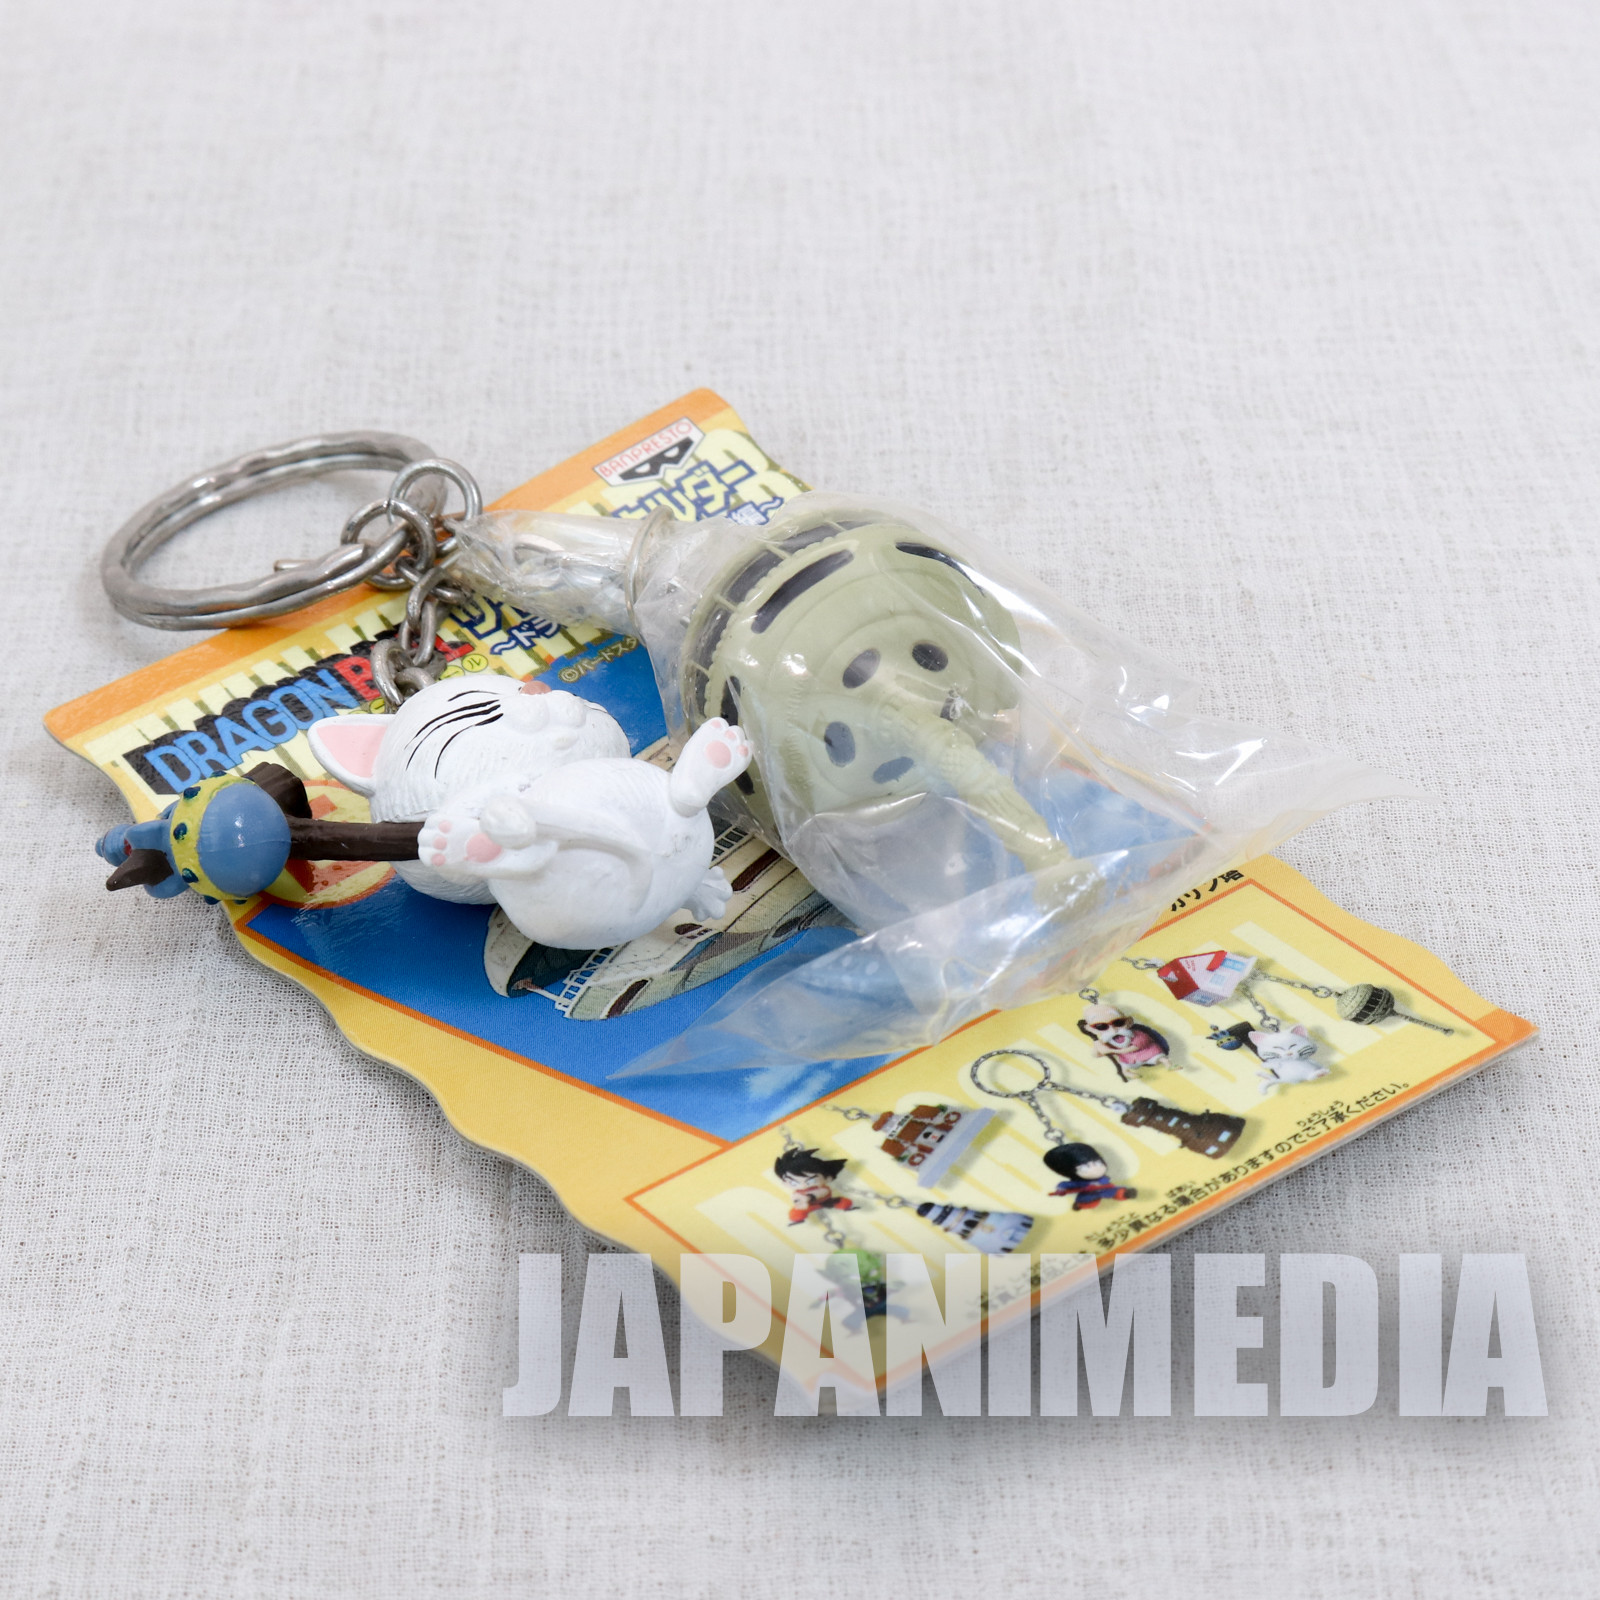 RARE! Dragon Ball Z Karin with Tower Figure Key Chain Banpresto JAPAN ANIME